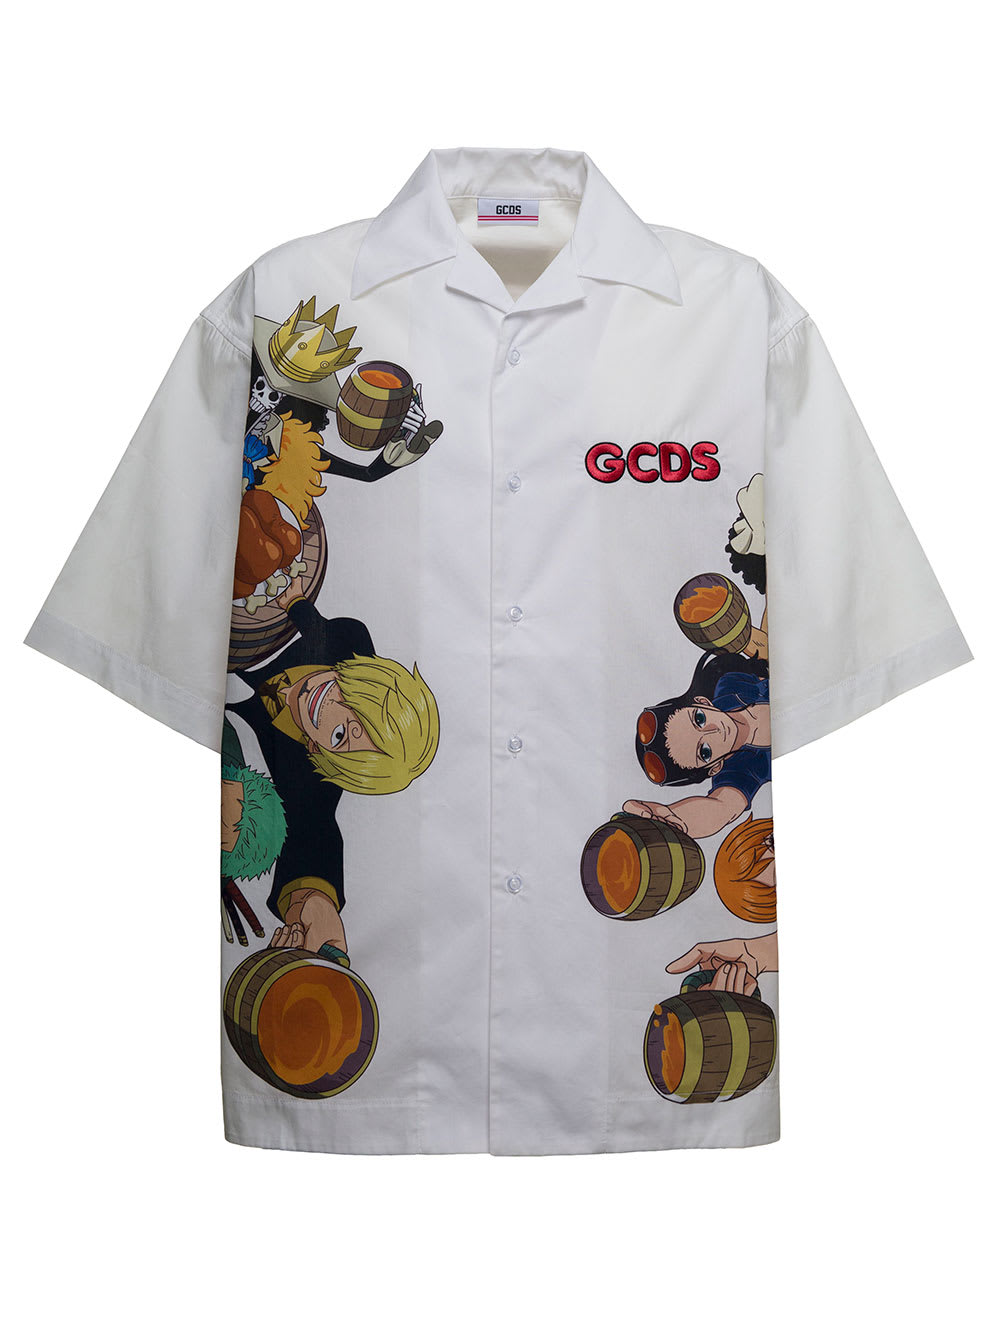 GCDS One Piece Straw White Cotton Shirt